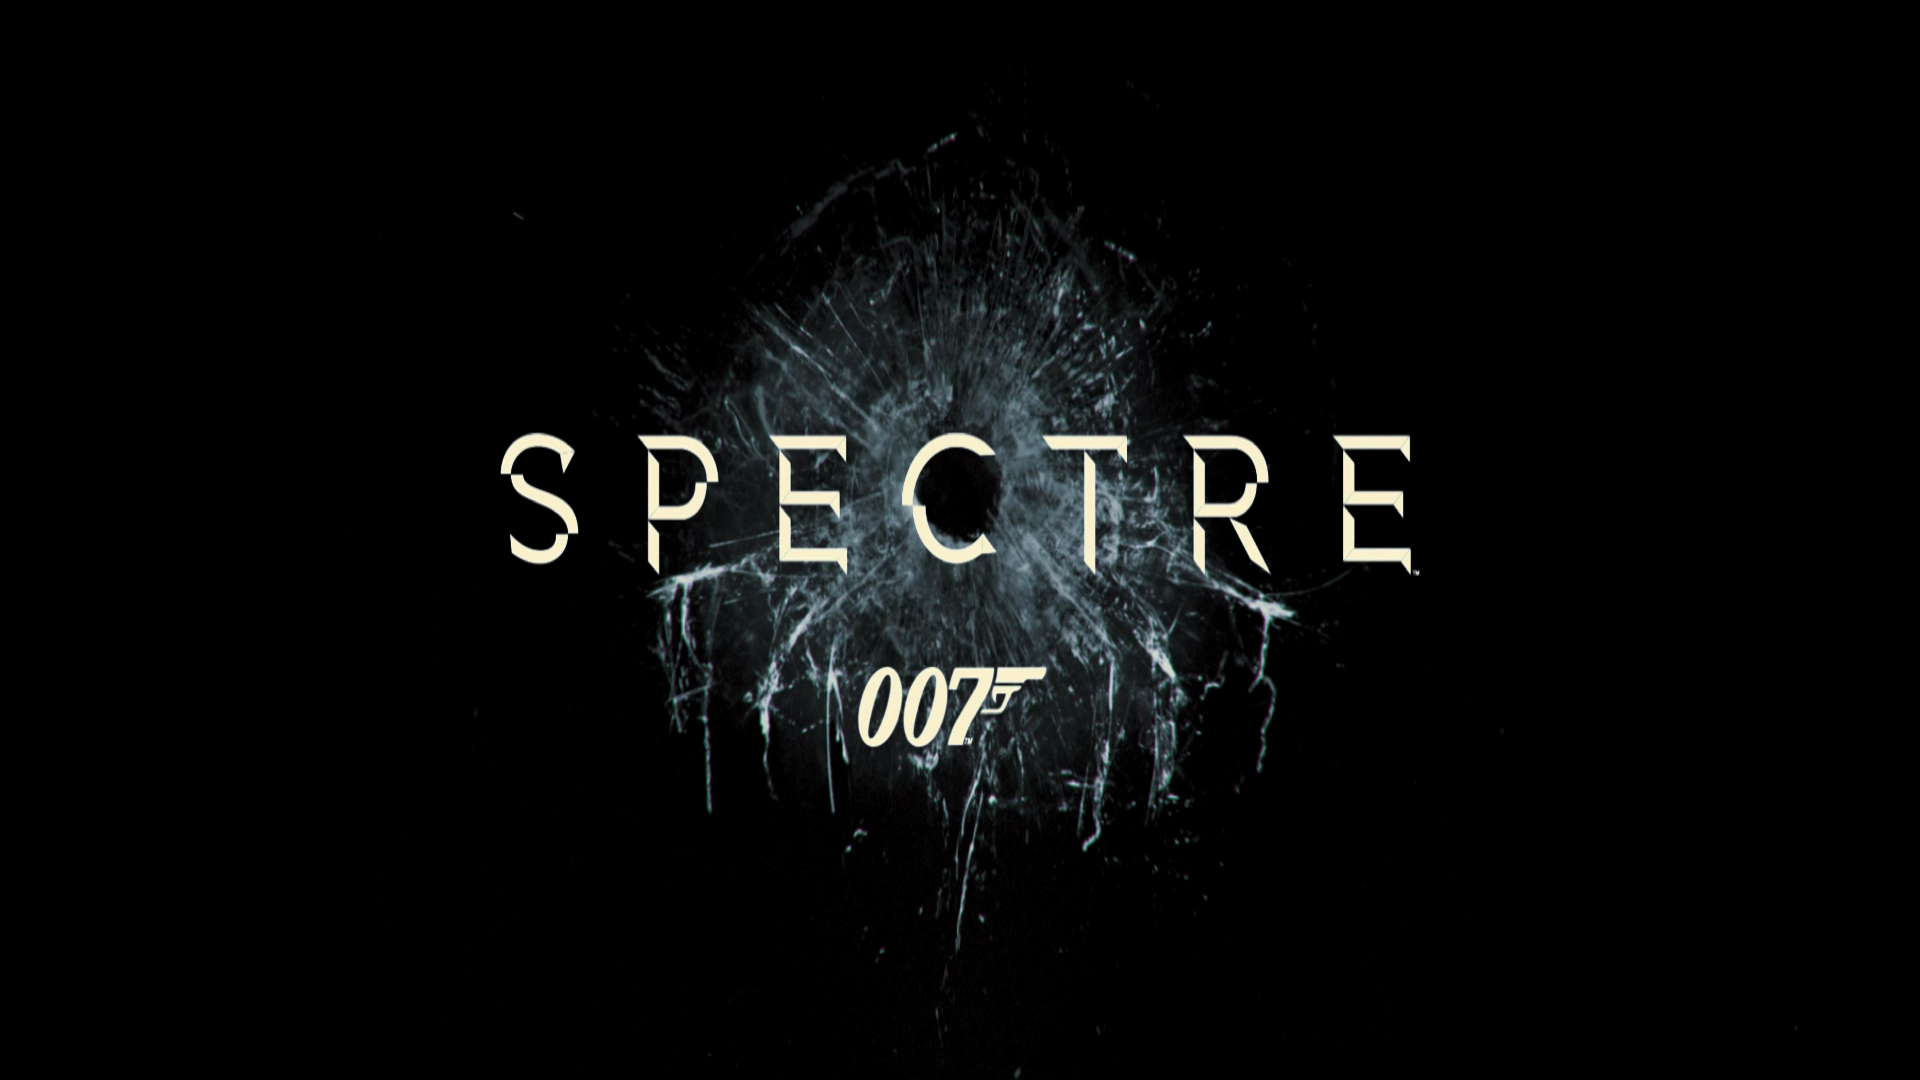 Screencaps From The Upning Bond Movie Spectre Wallpaper